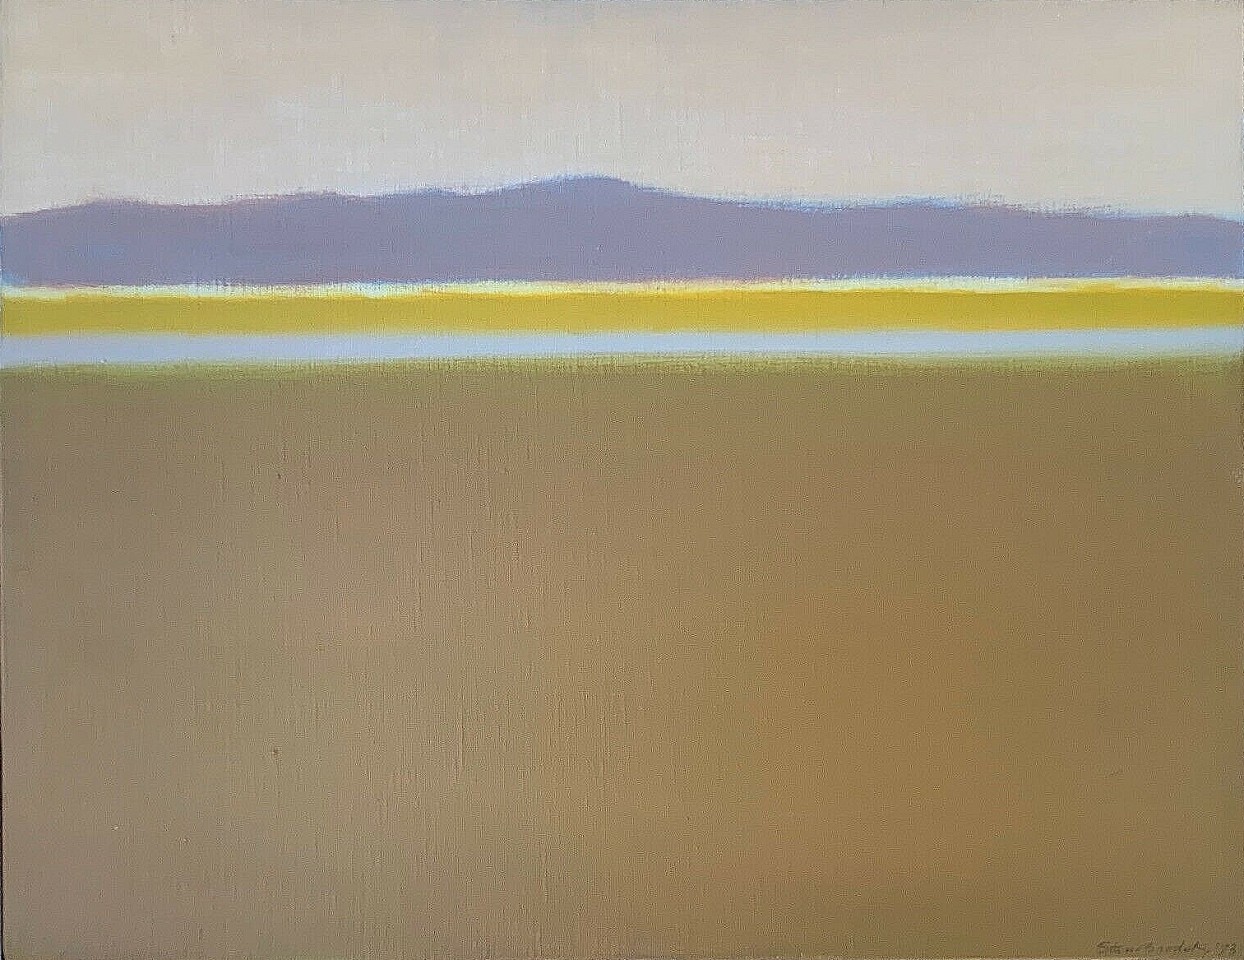 Stan Brodsky, Near Taos, 1973
Oil on canvas, 14 x 18 in.
BRO006